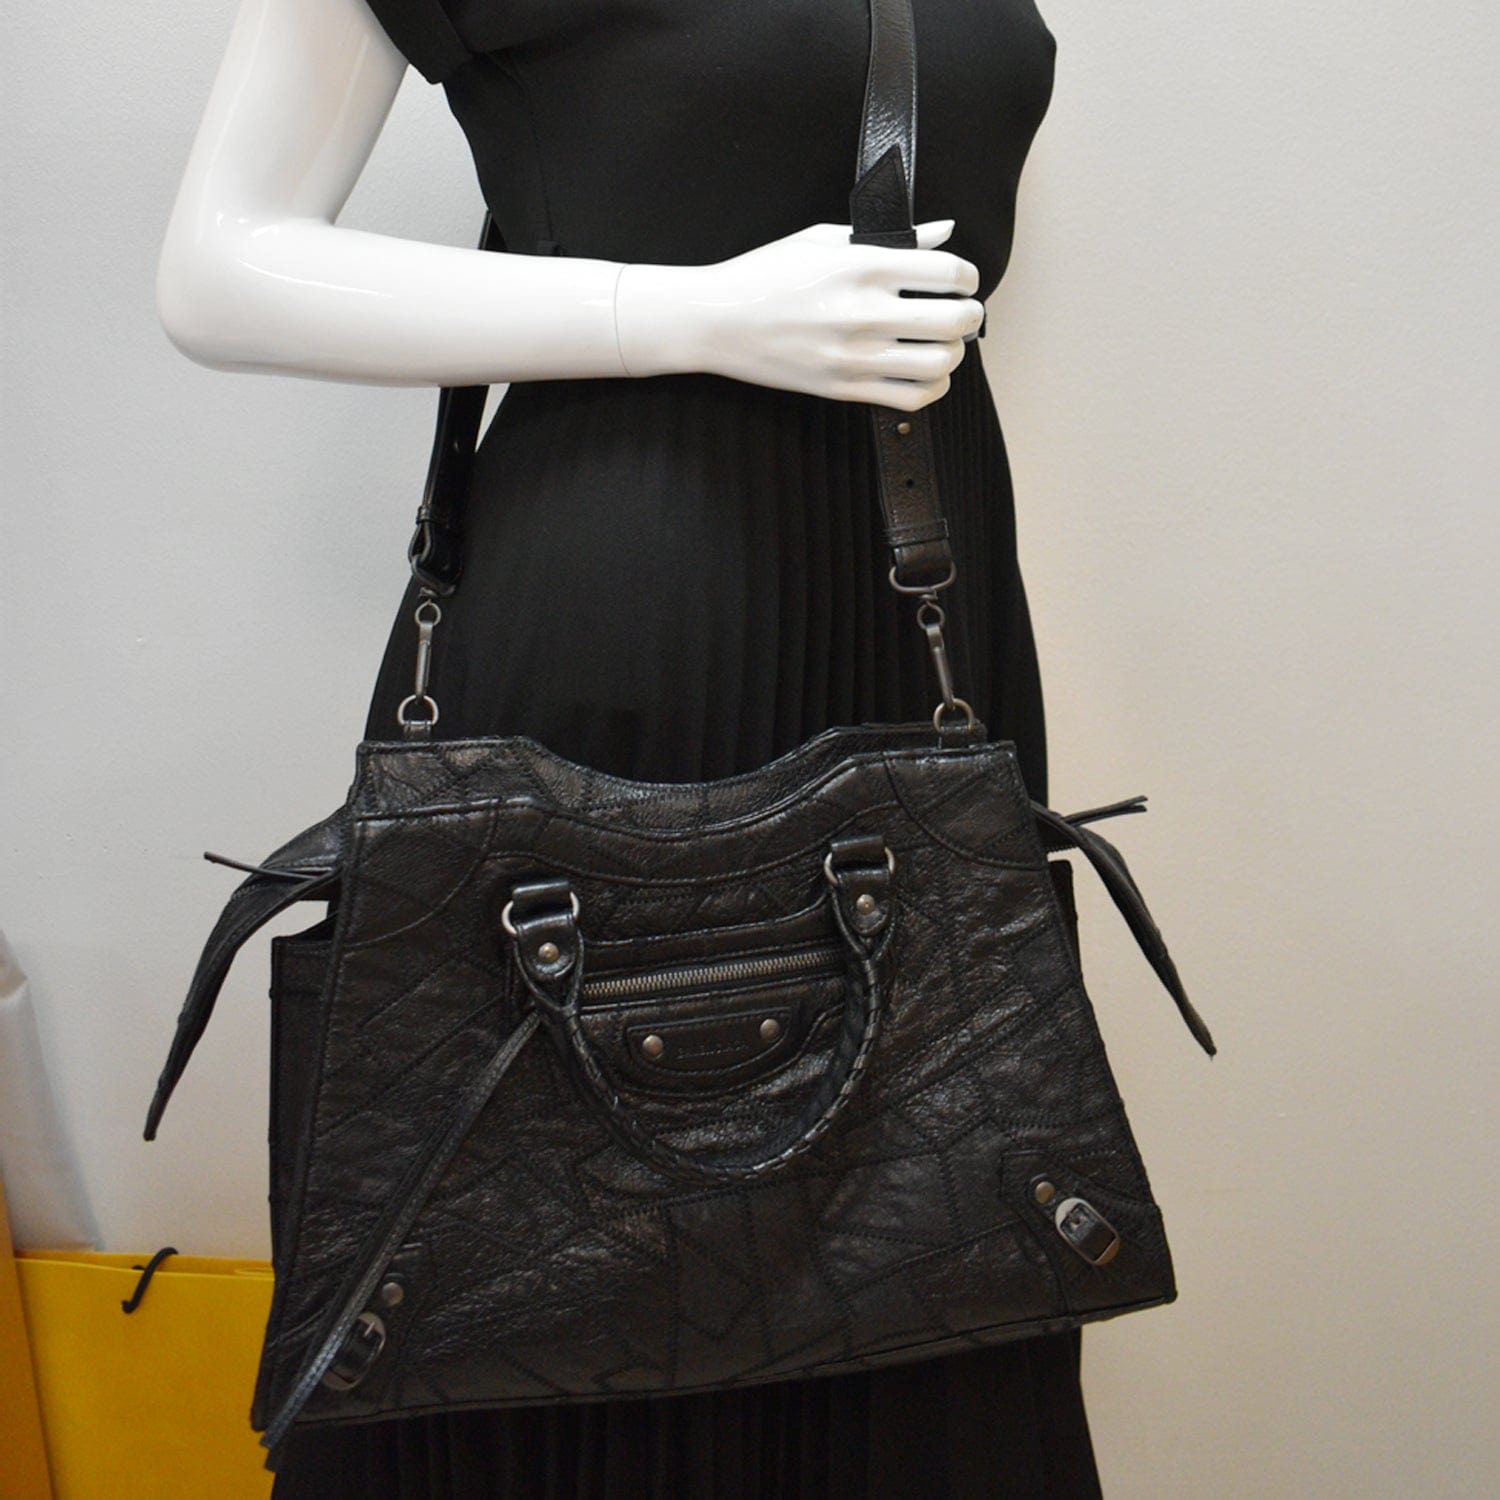 Balenciaga Classic City Handbag in Black Leather